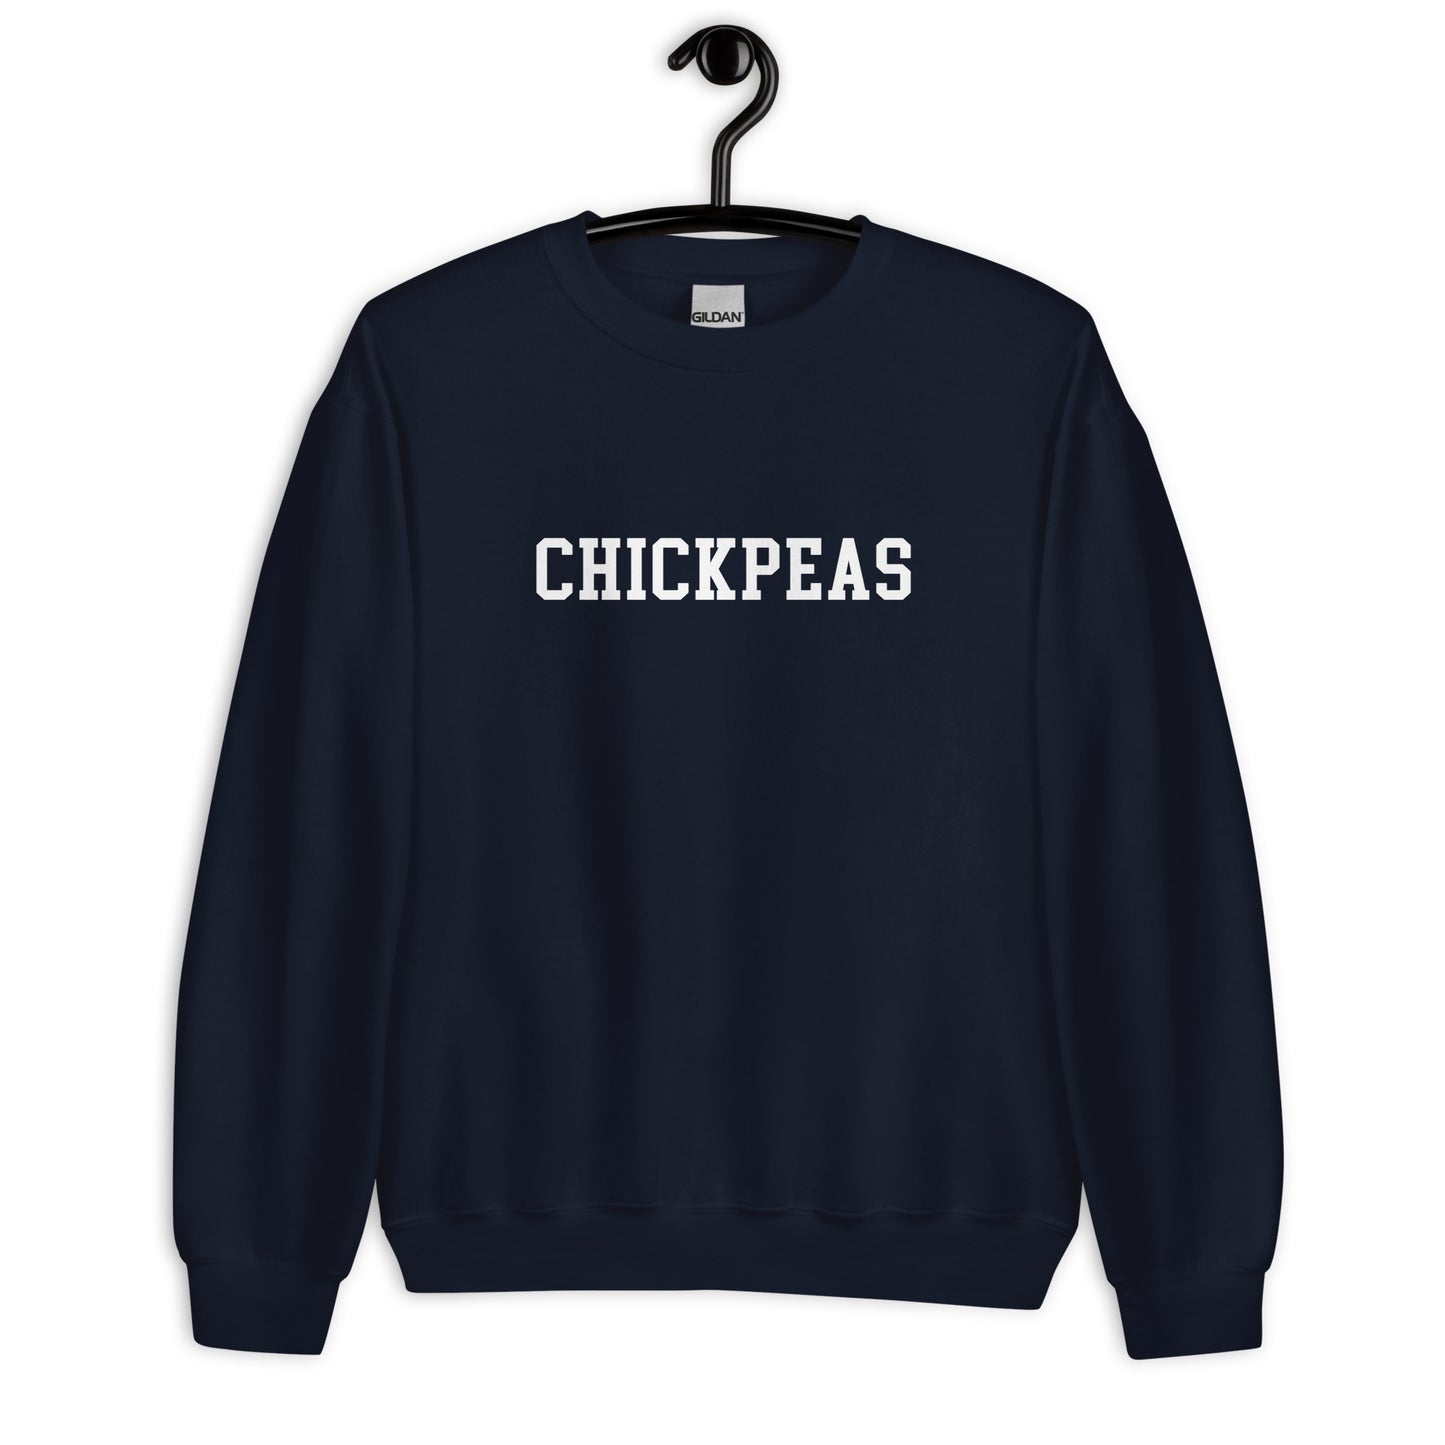 Chickpeas Sweatshirt - Straight Font